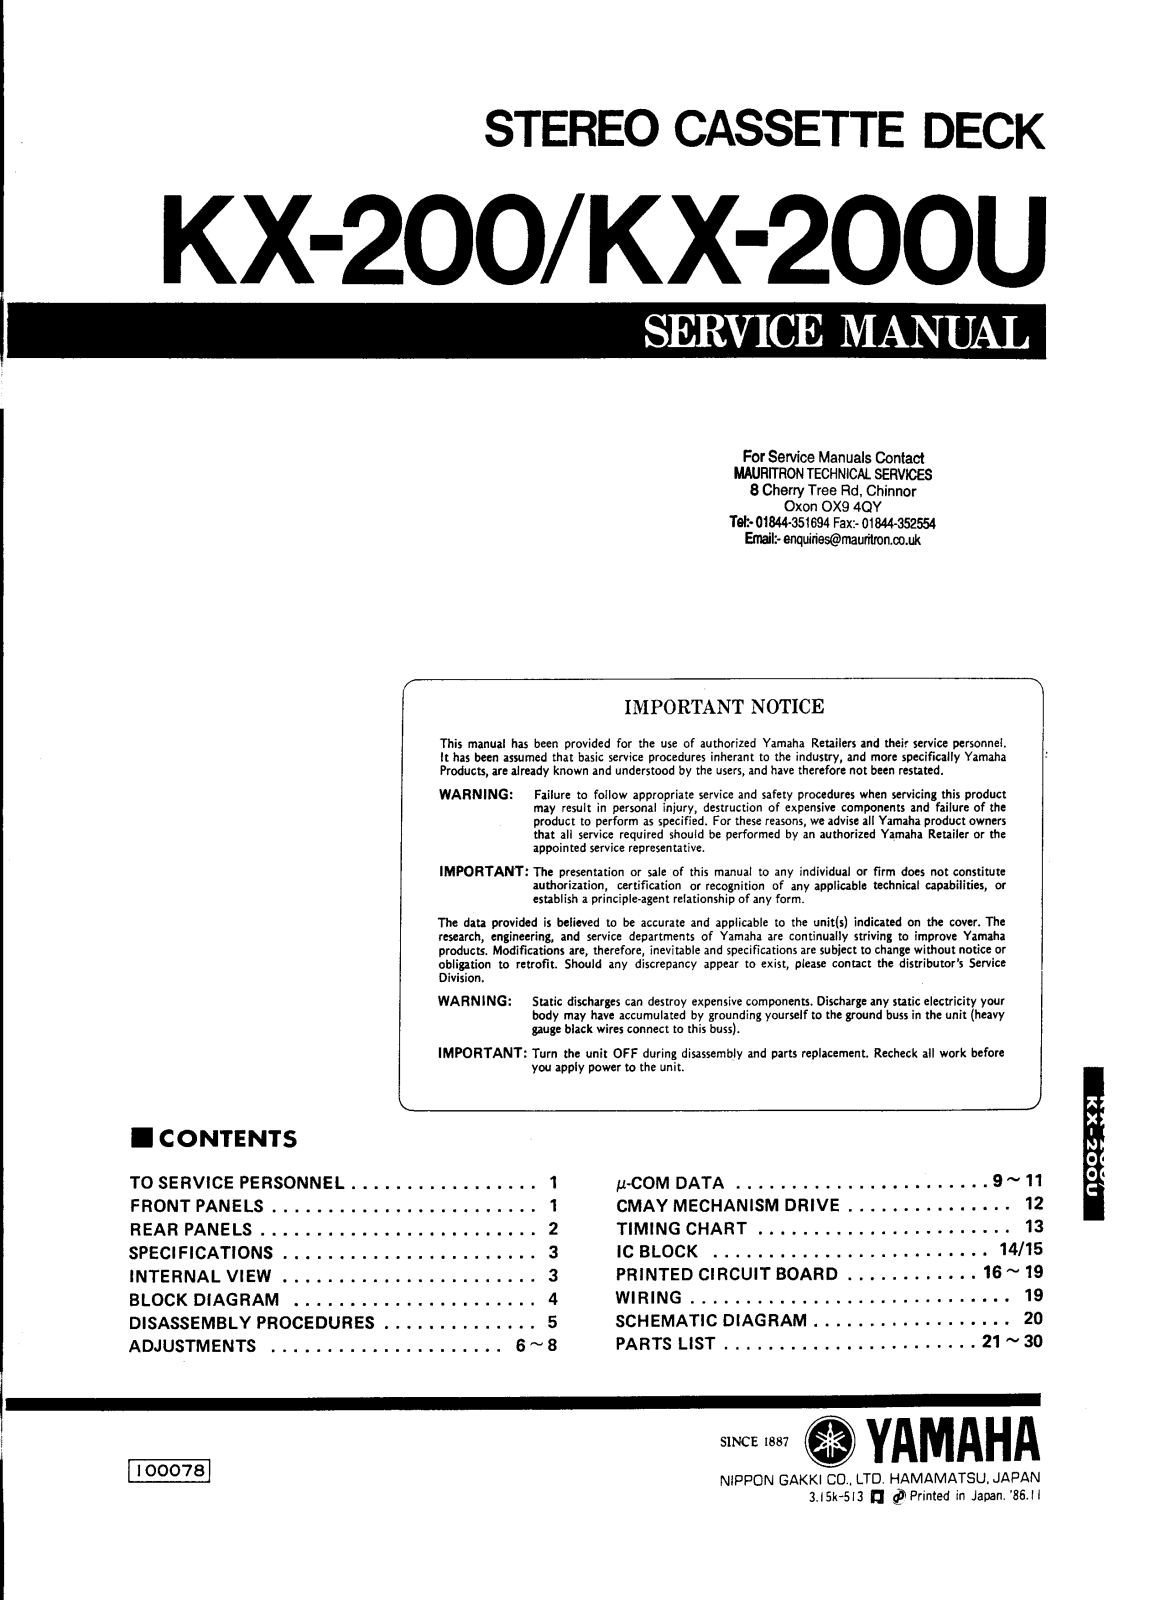 Yamaha KX-200, KX-200-U Service manual